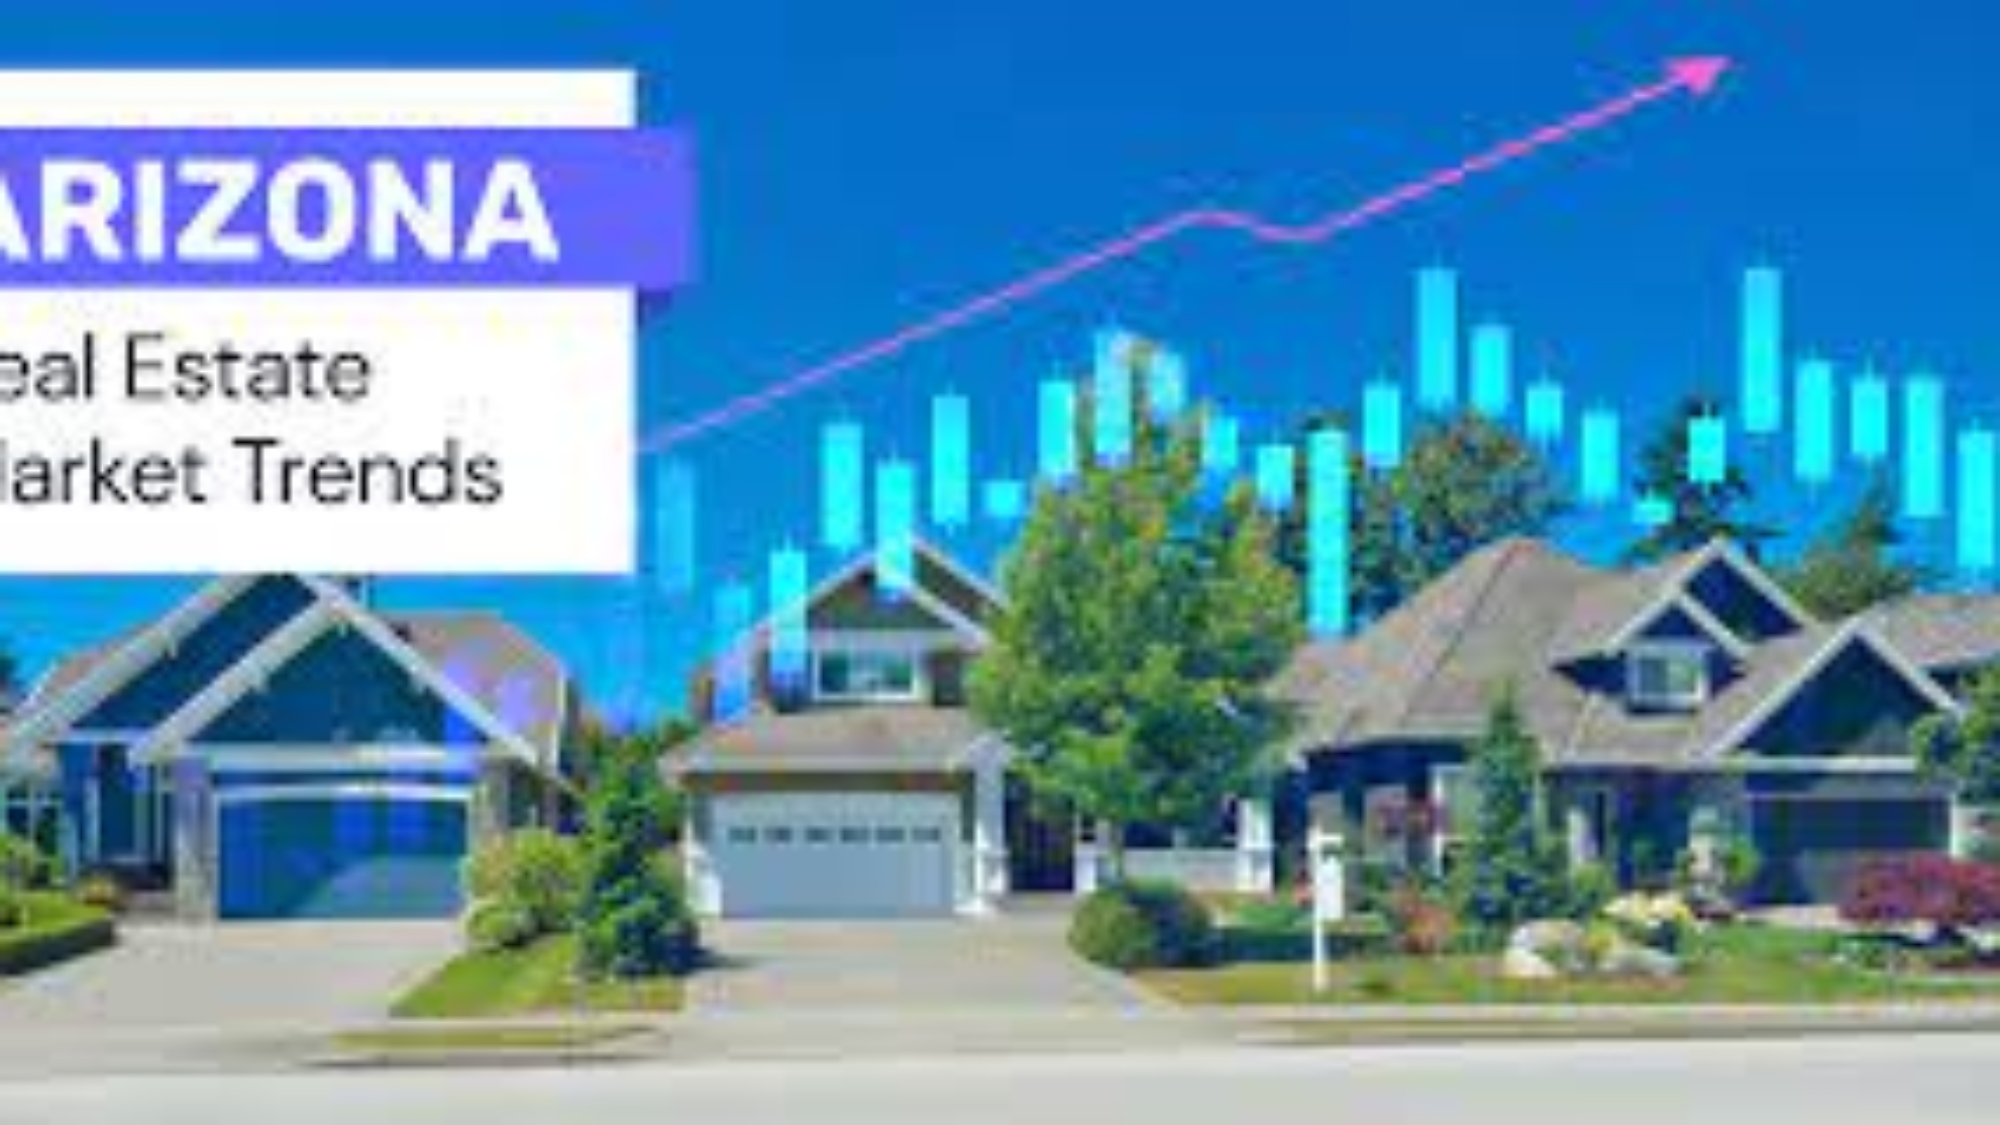 Latest Real Estate Market Trends in Arizona